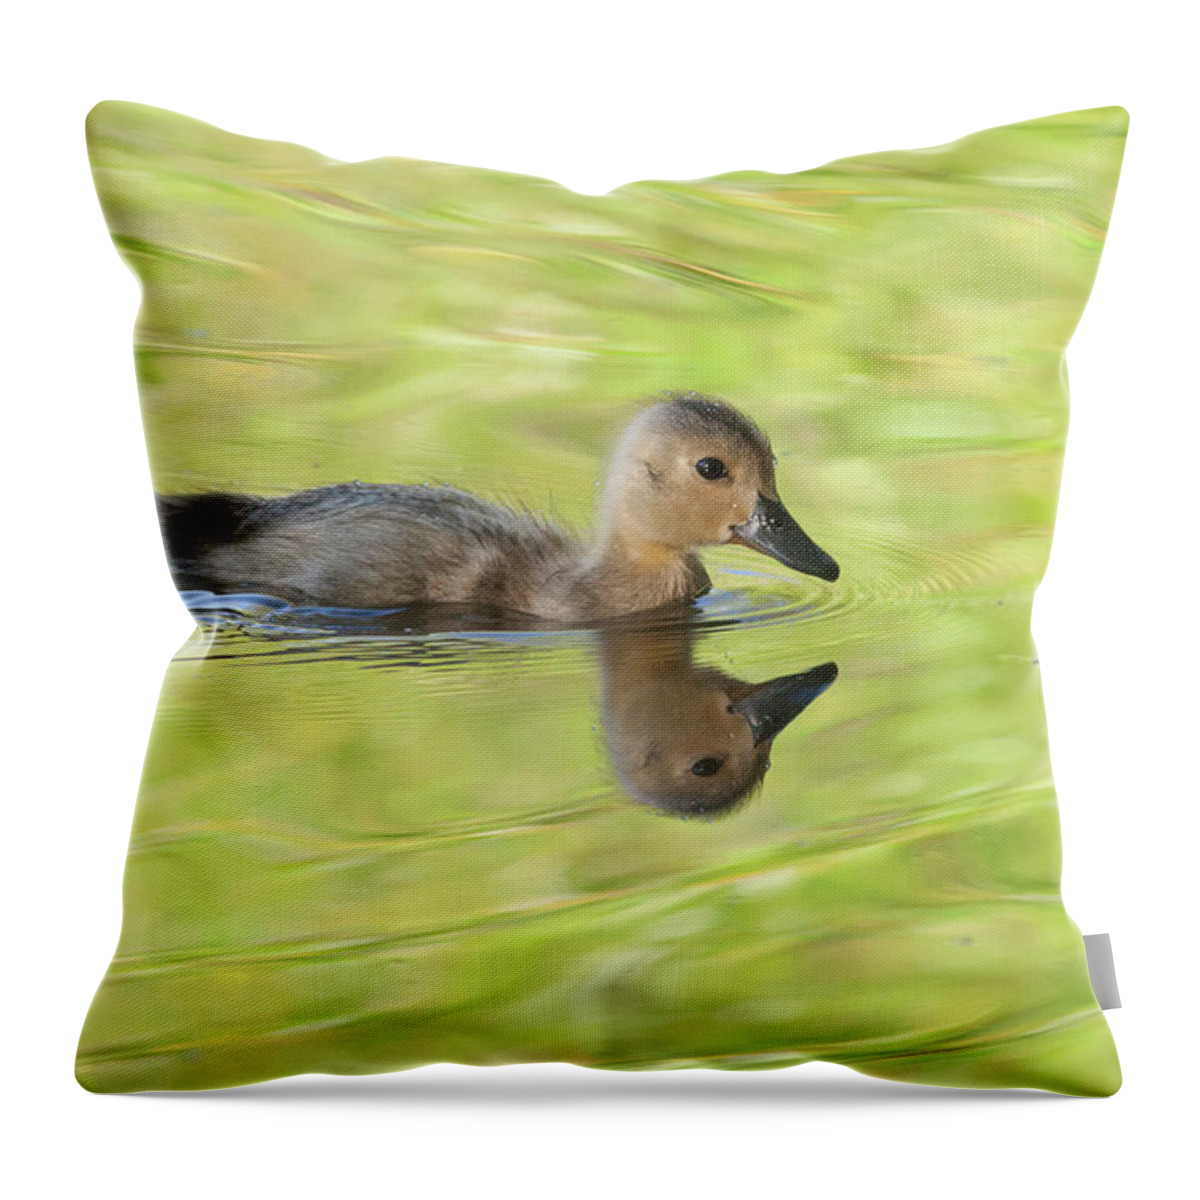 Suzi Eszterhas Throw Pillow featuring the photograph Mallard Duckling Swimming by Suzi Eszterhas